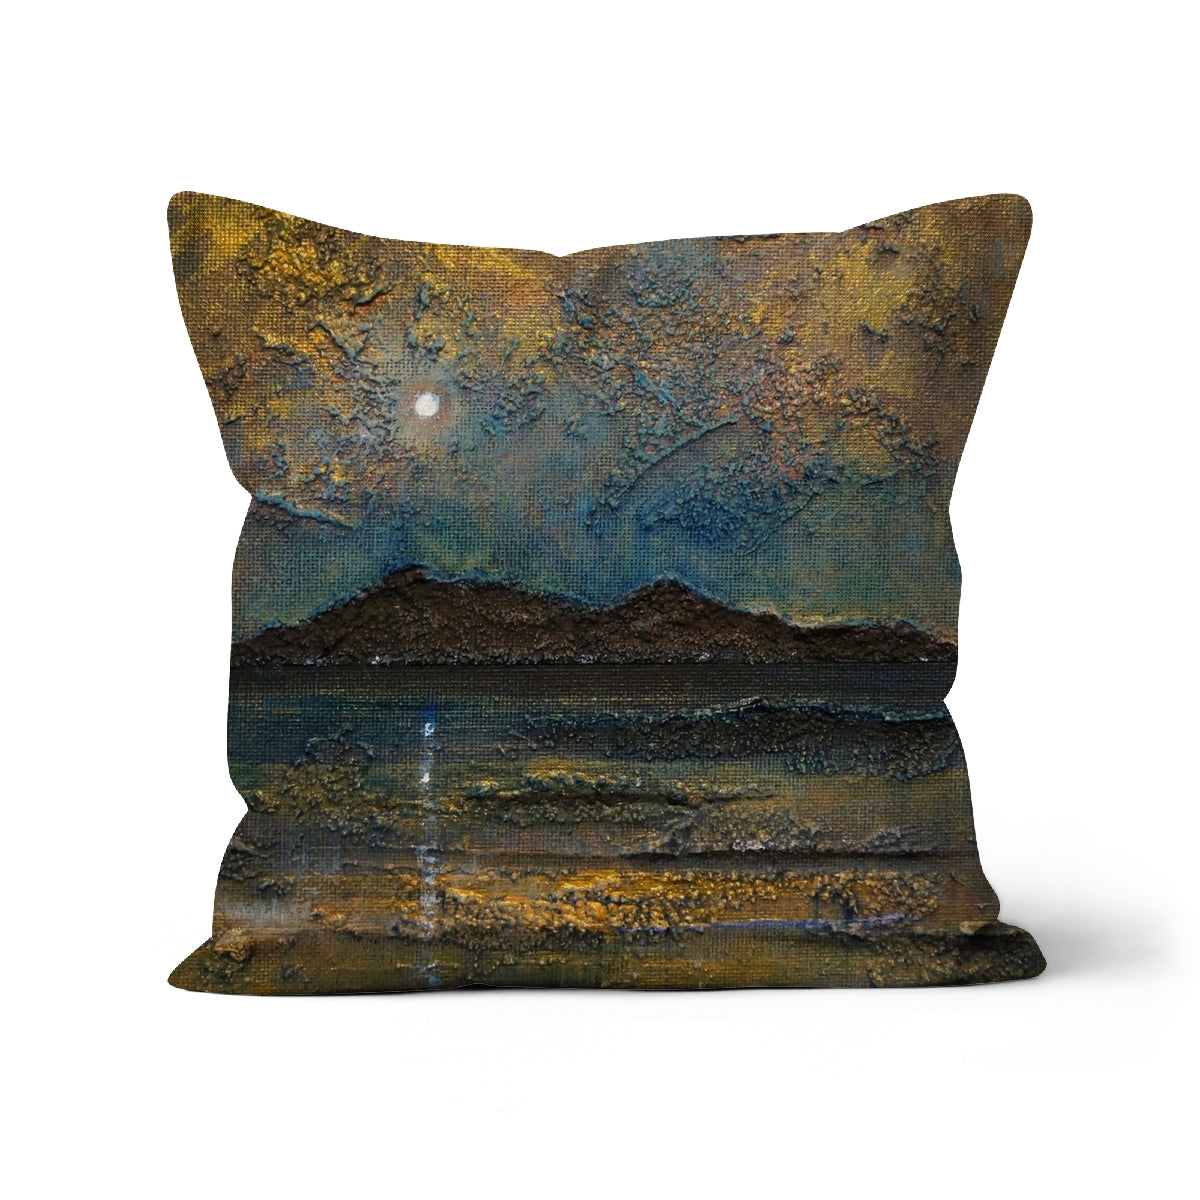 Arran Moonlight Art Gifts Cushion-Cushions-Arran Art Gallery-Linen-18"x18"-Paintings, Prints, Homeware, Art Gifts From Scotland By Scottish Artist Kevin Hunter